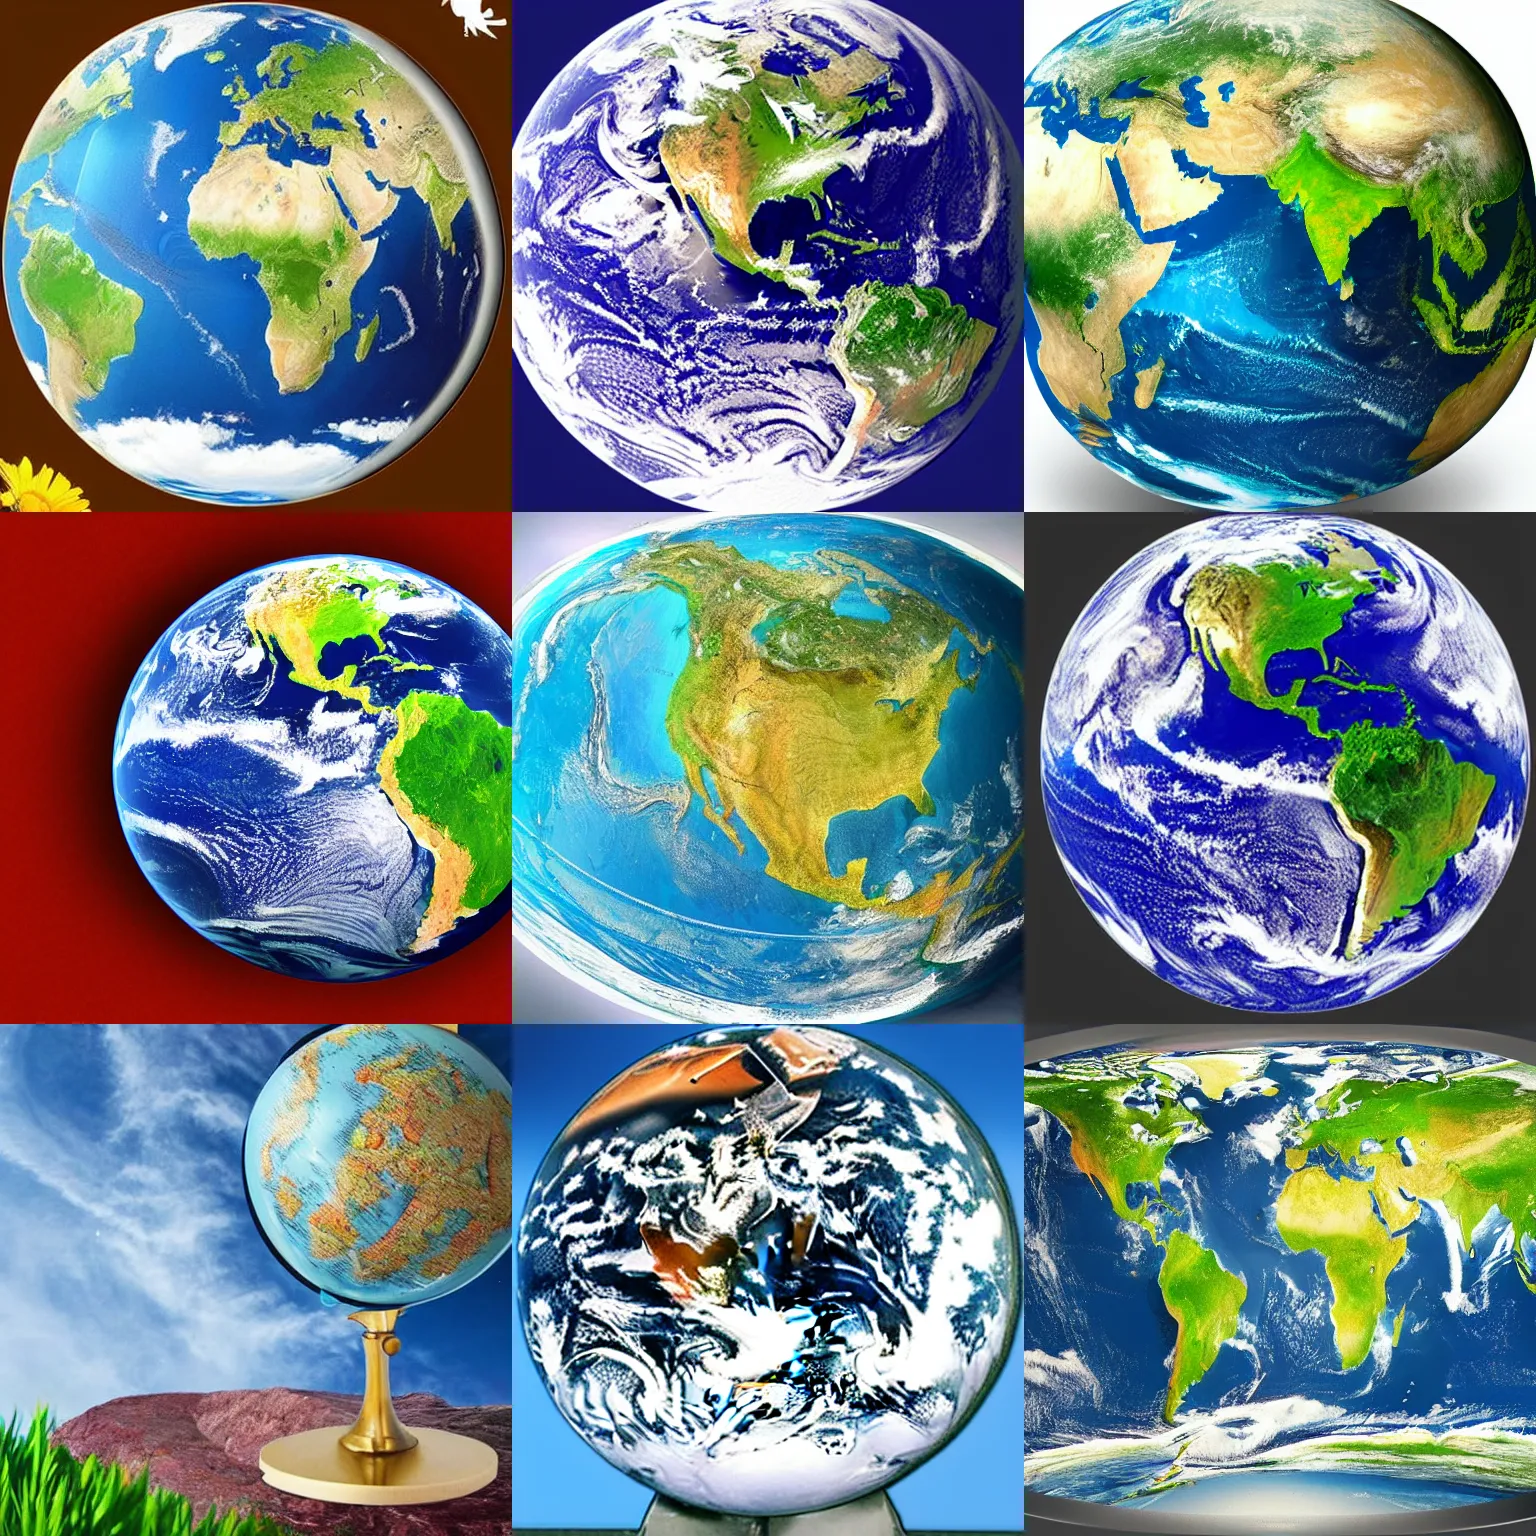 Prompt: beautiful planet earth globe